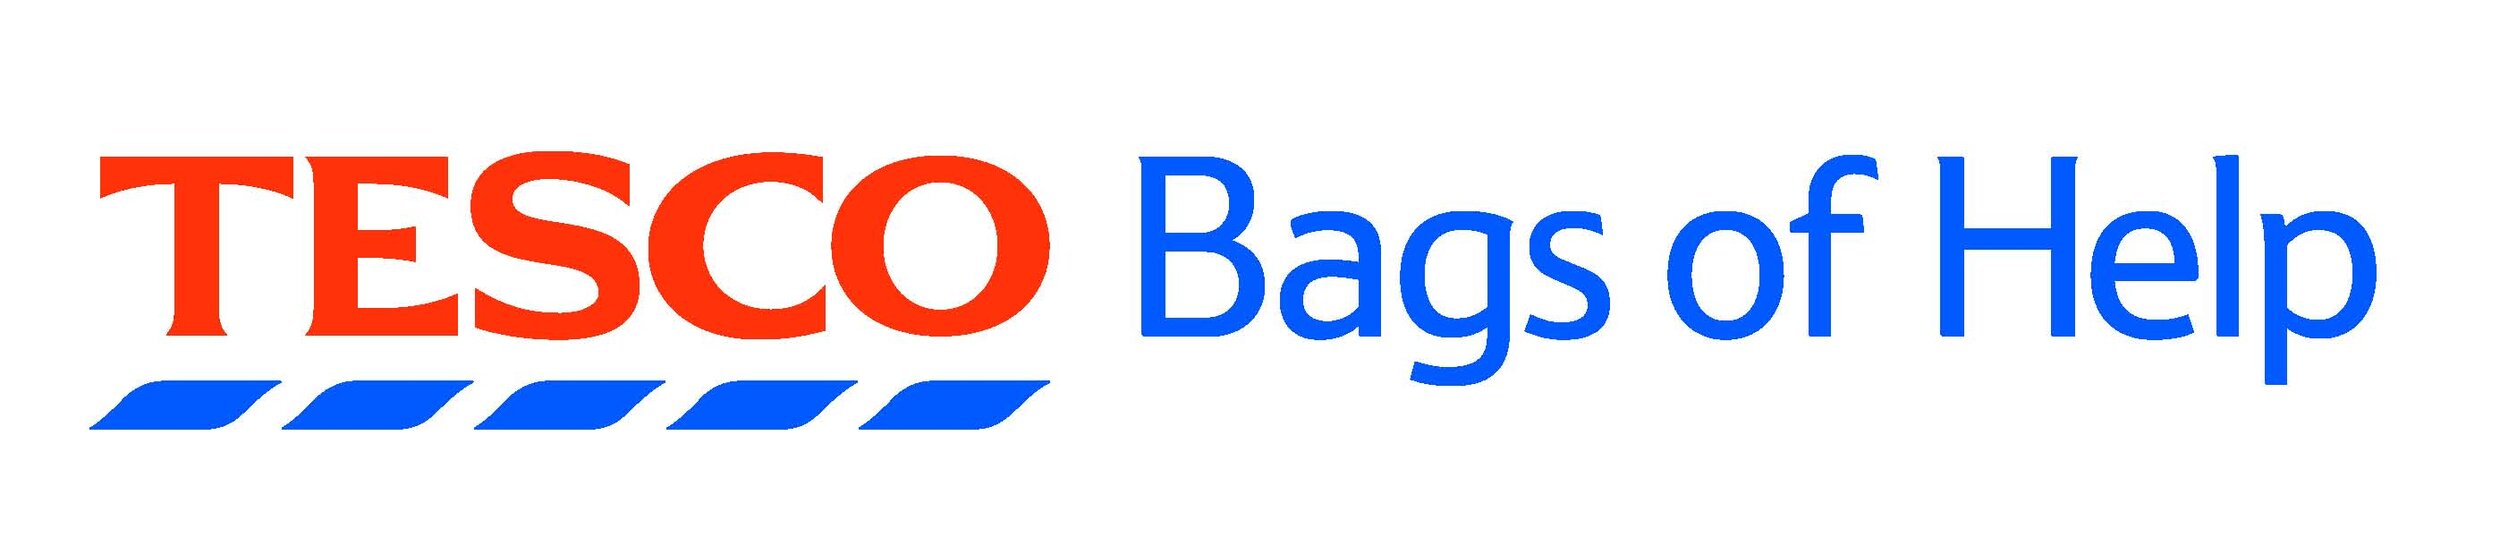 Tesco_Bags_of_Help_logo.jpg